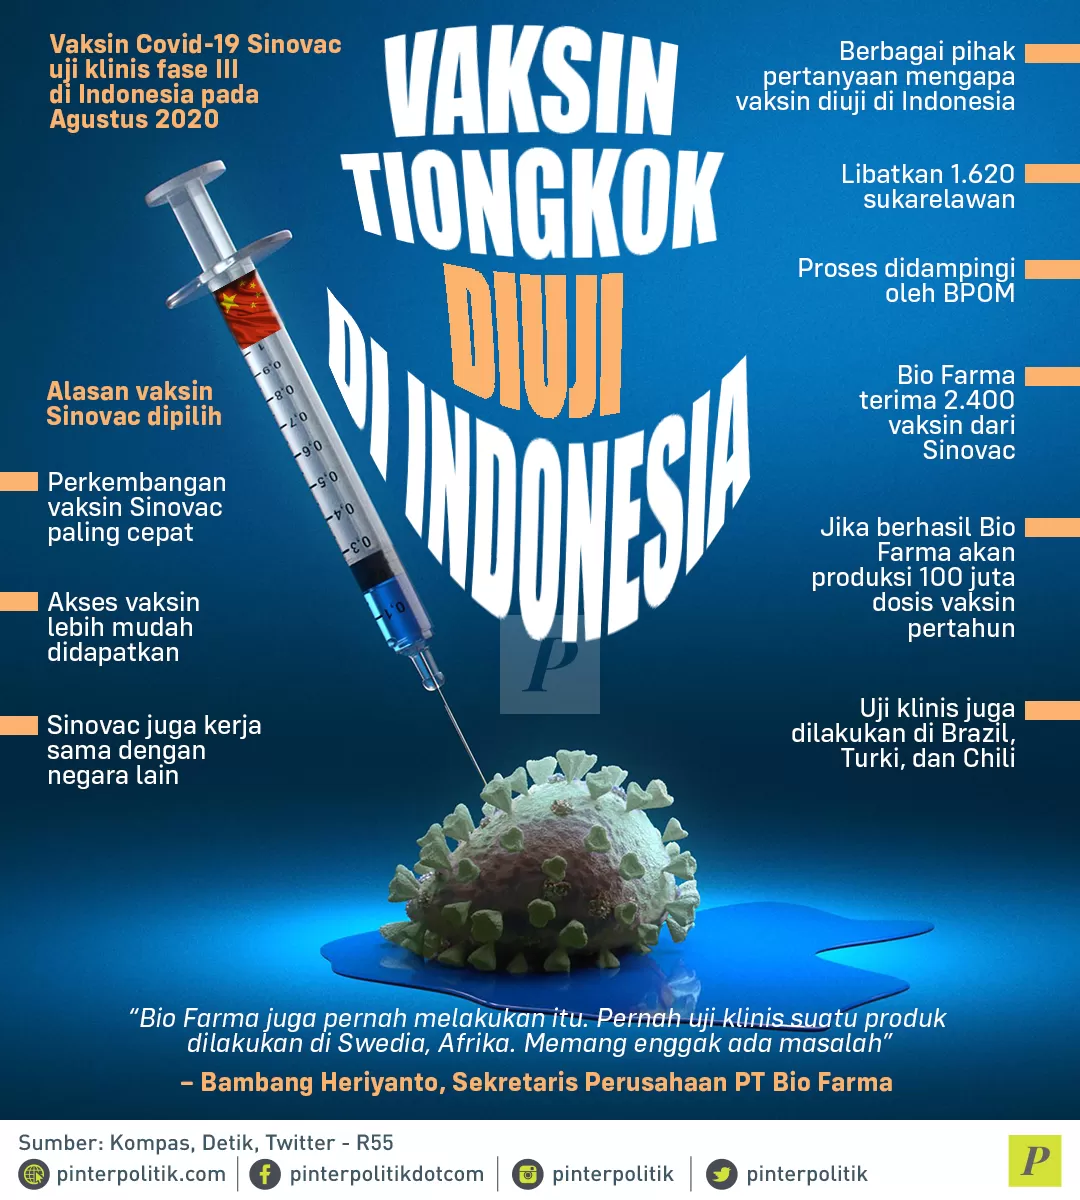 Vaksin Tiongkok Diuji DiIndonesia